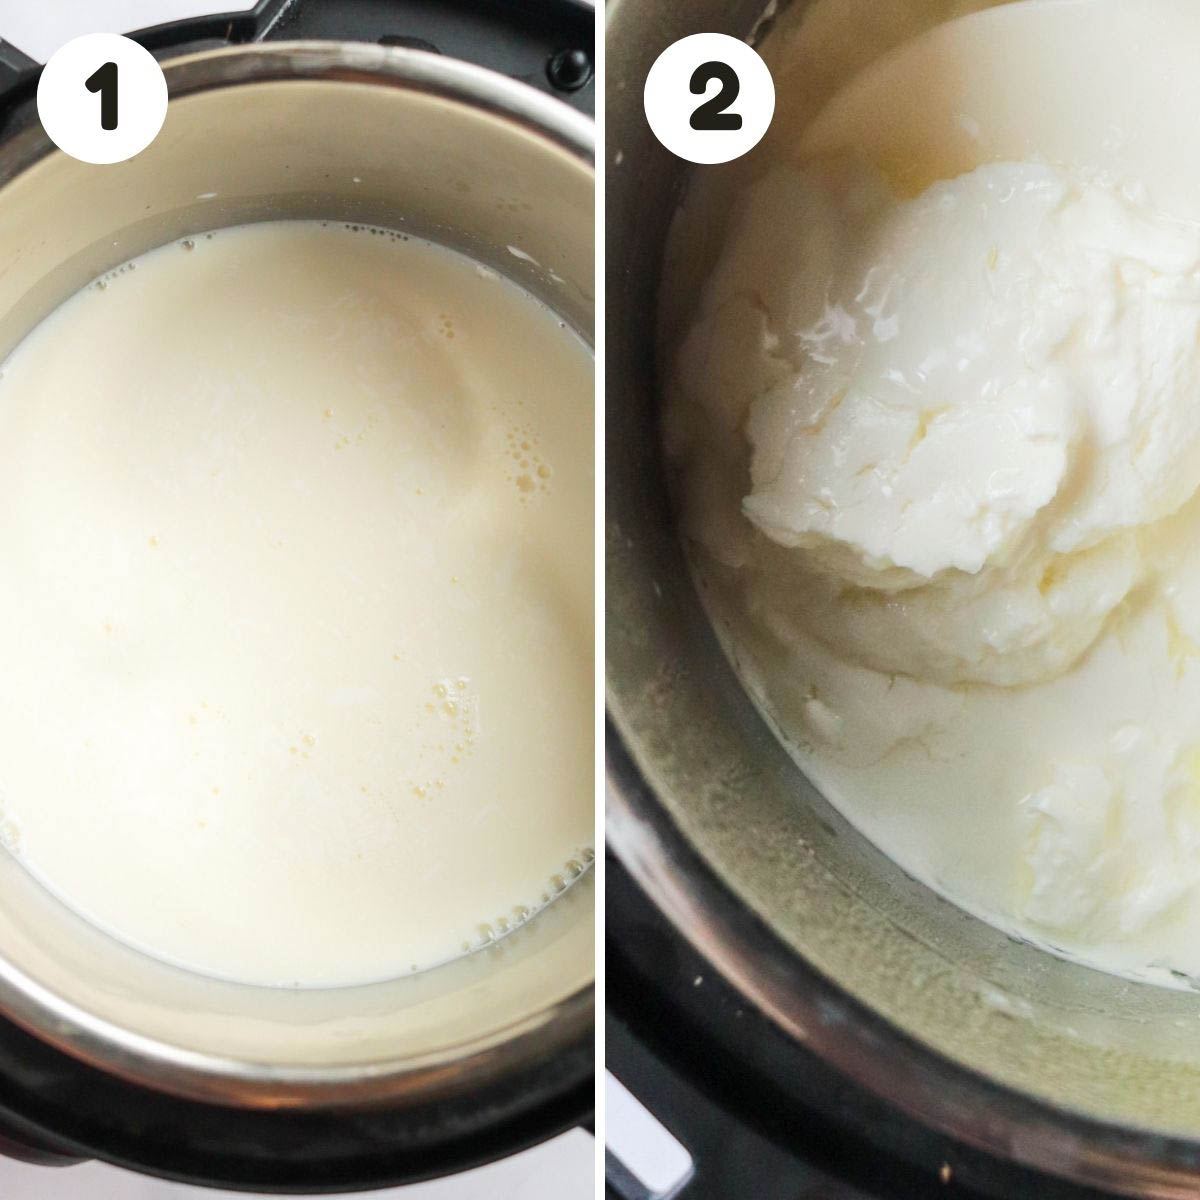 Steps to make the yogurt.